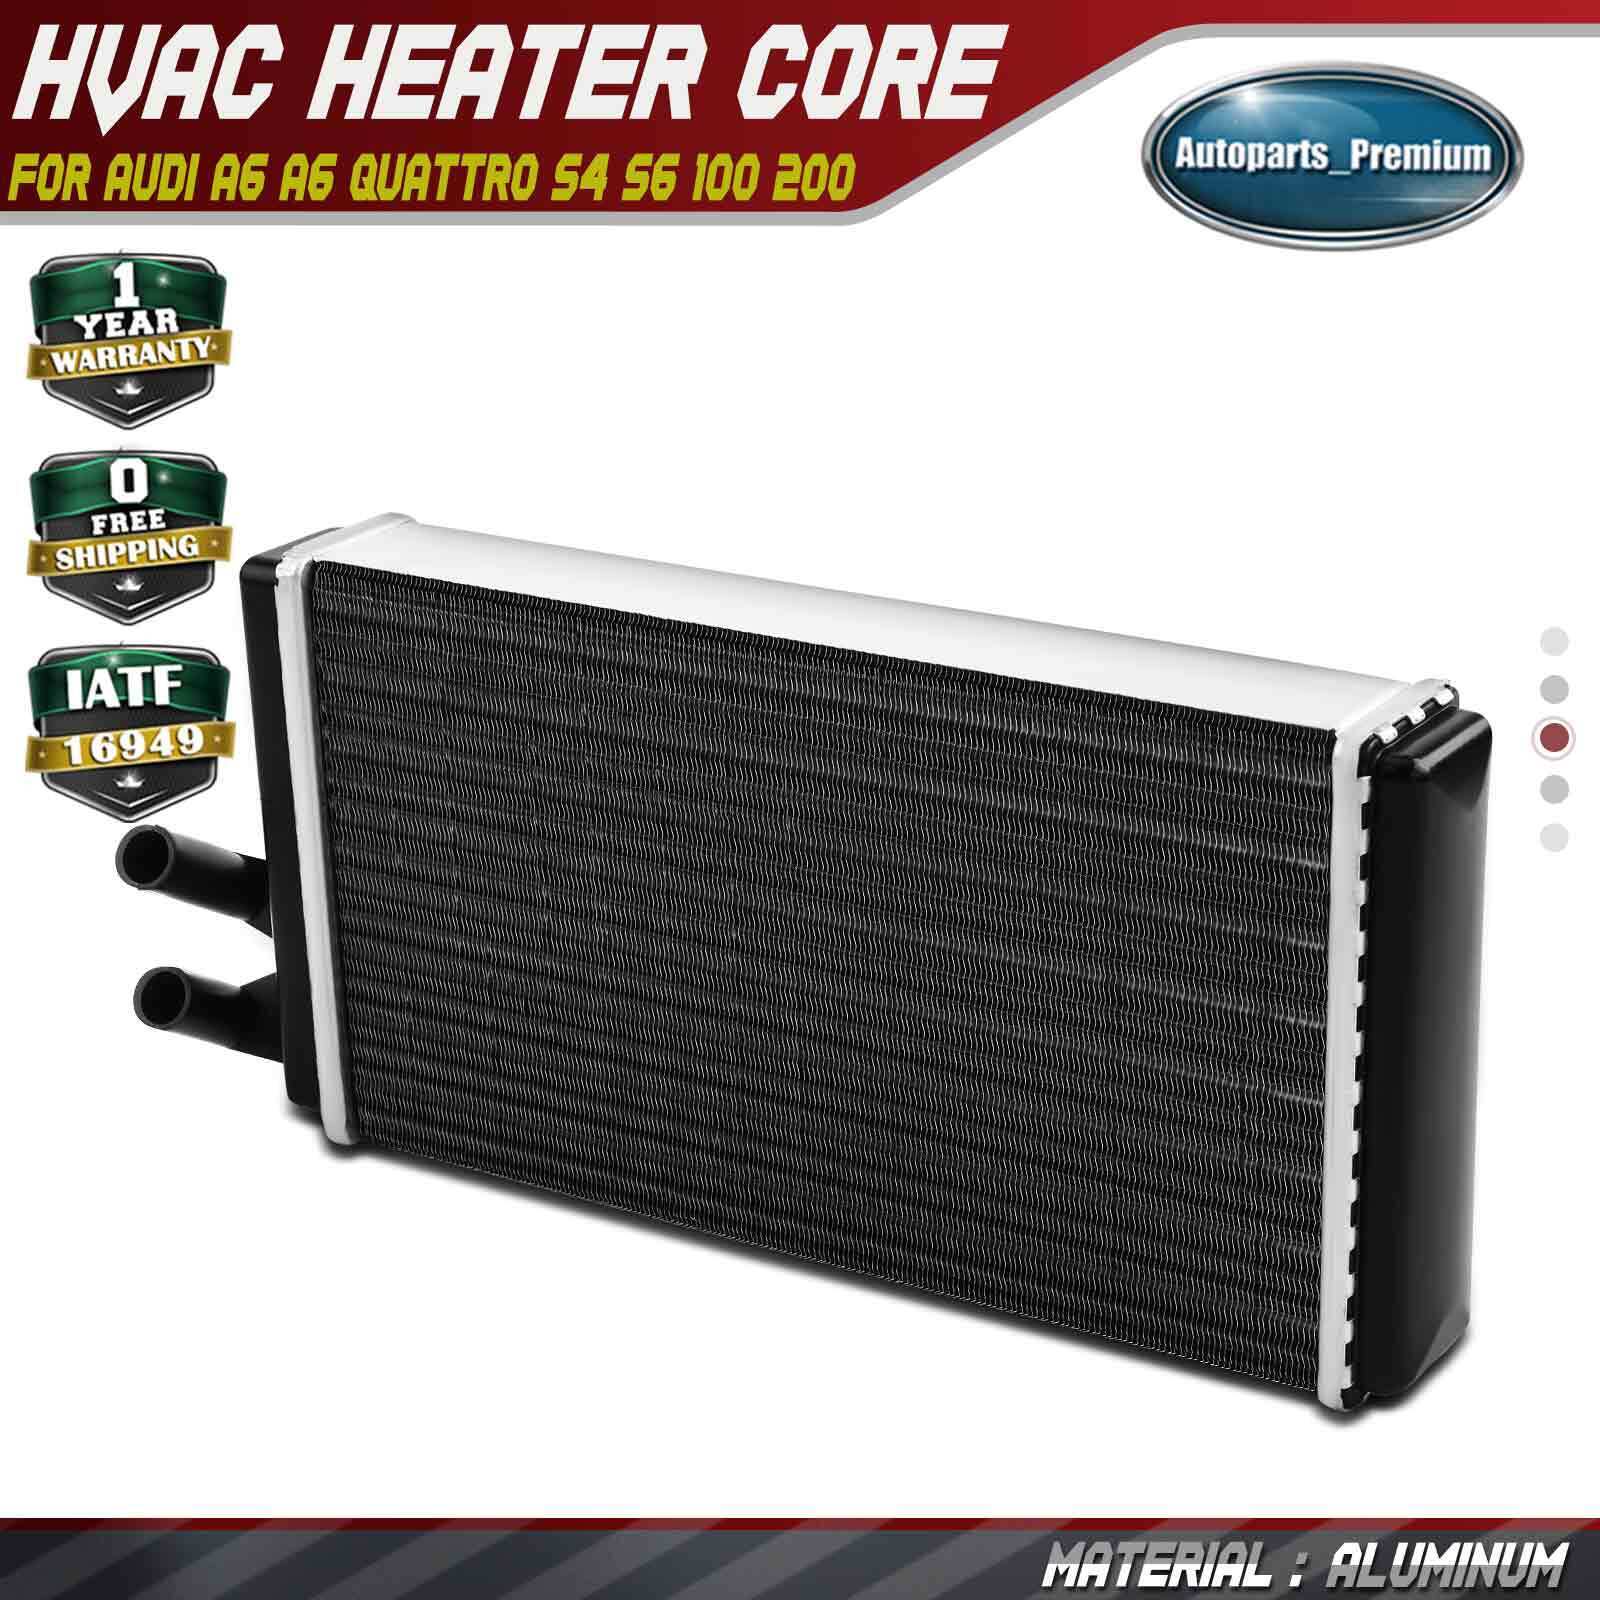 HVAC Heater Core for Audi A6 95-98 100 200 V8 Quattro S4 S6 4000 5000 Coupe Fox